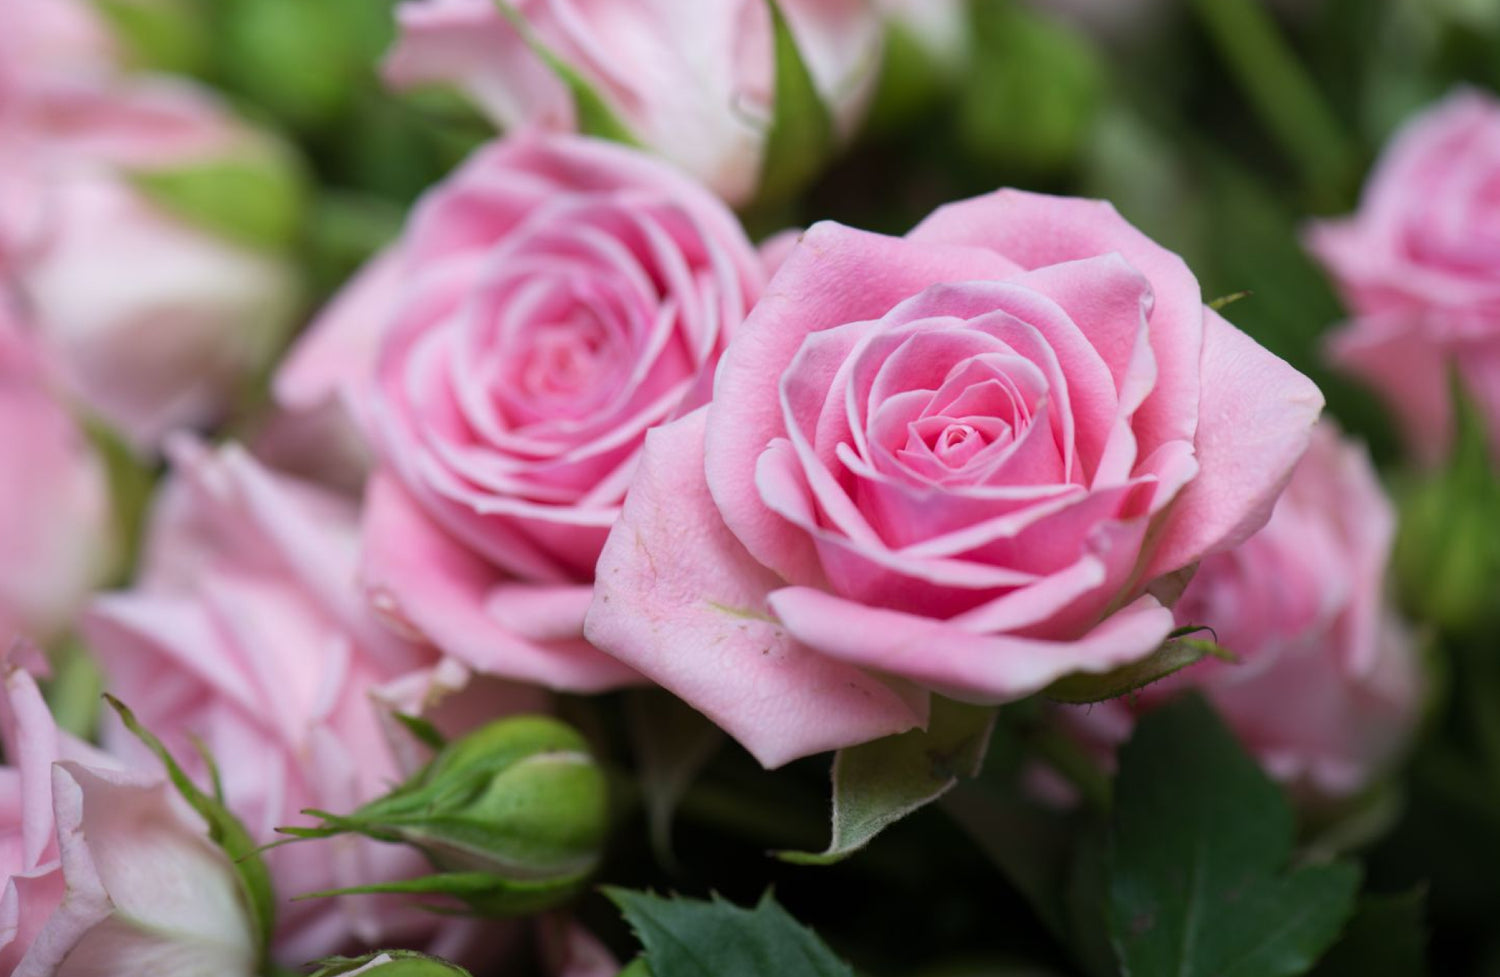 Arti Bunga Mawar Pink: Dibalik Pesona si Merah Muda Merona